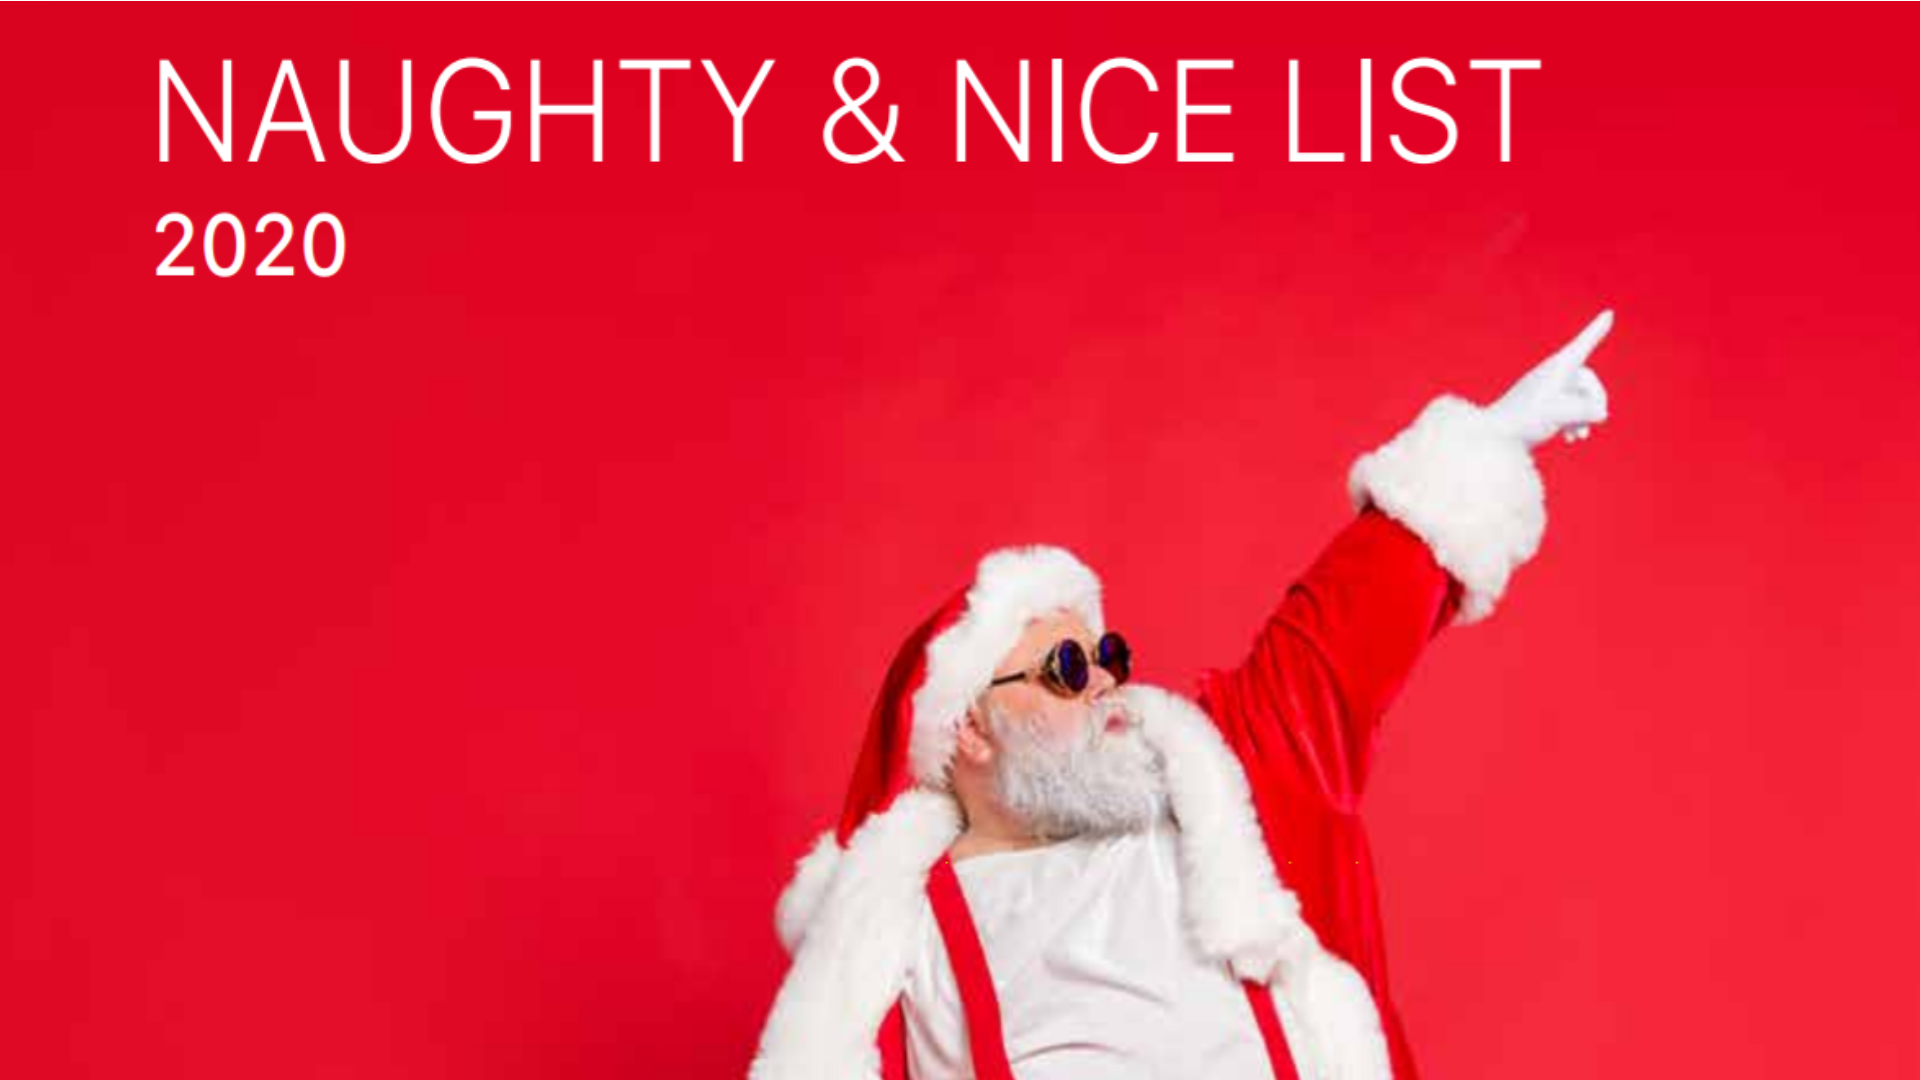 Did you make Santa's naughty and nice list? North Pole's Dept. of